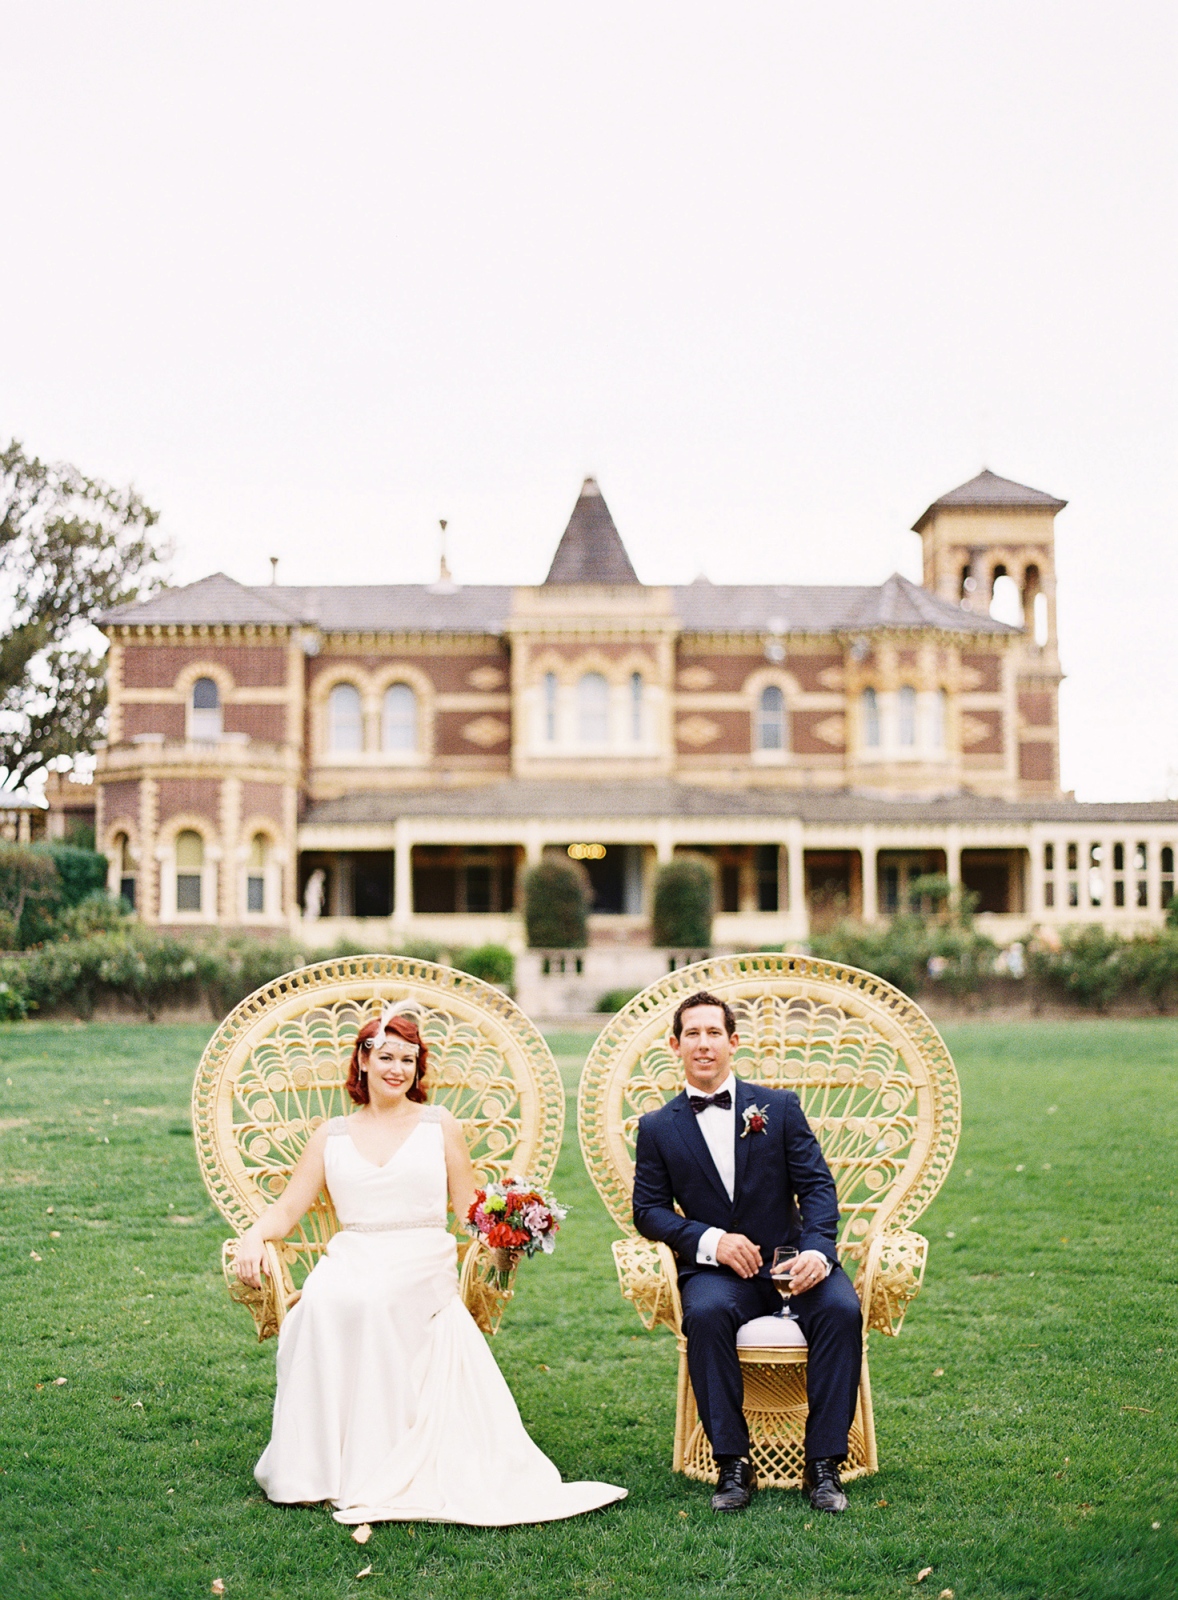 A Decadent Art Deco Inspired Wedding from Stewart Leishman